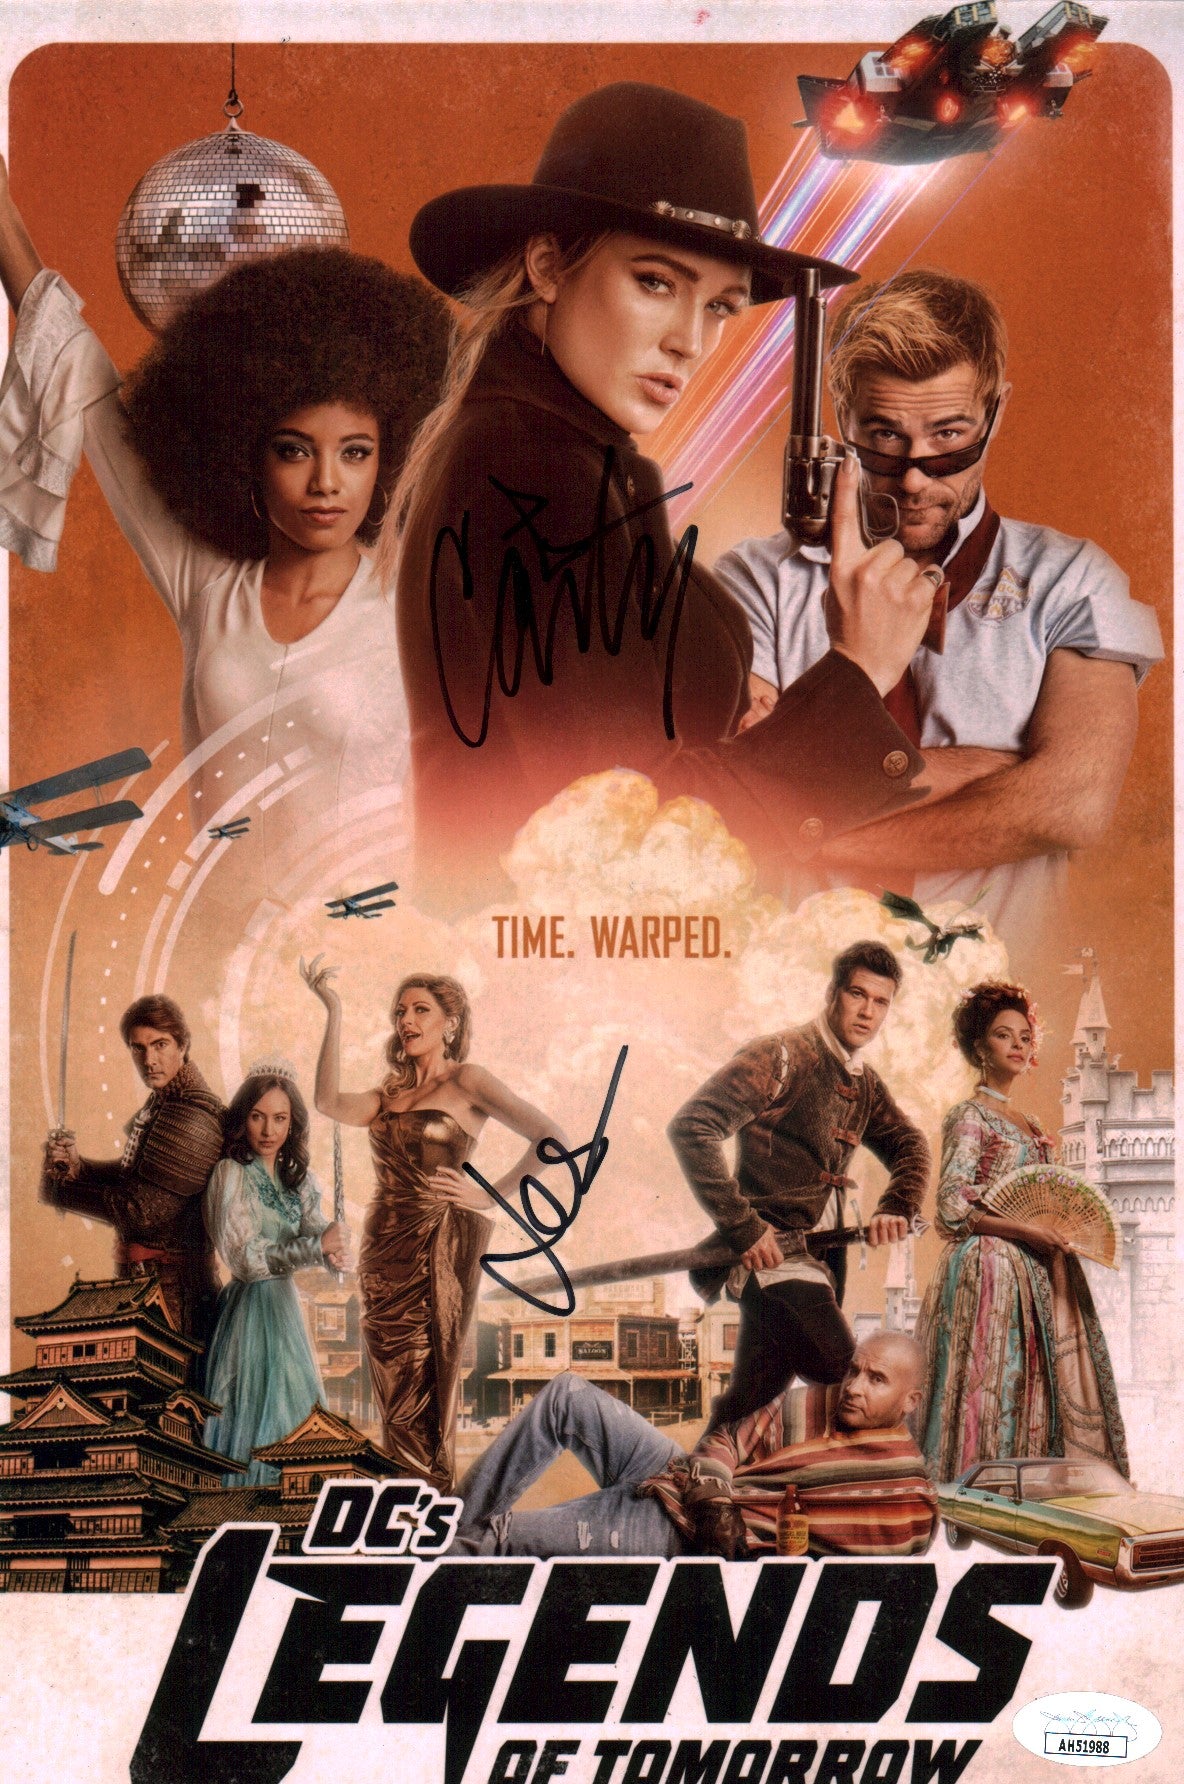 DC Legends of Tomorrow 8x12 Cast x2 Jes Macallan, Caity Lotz Signed Photo JSA Certified Autograph